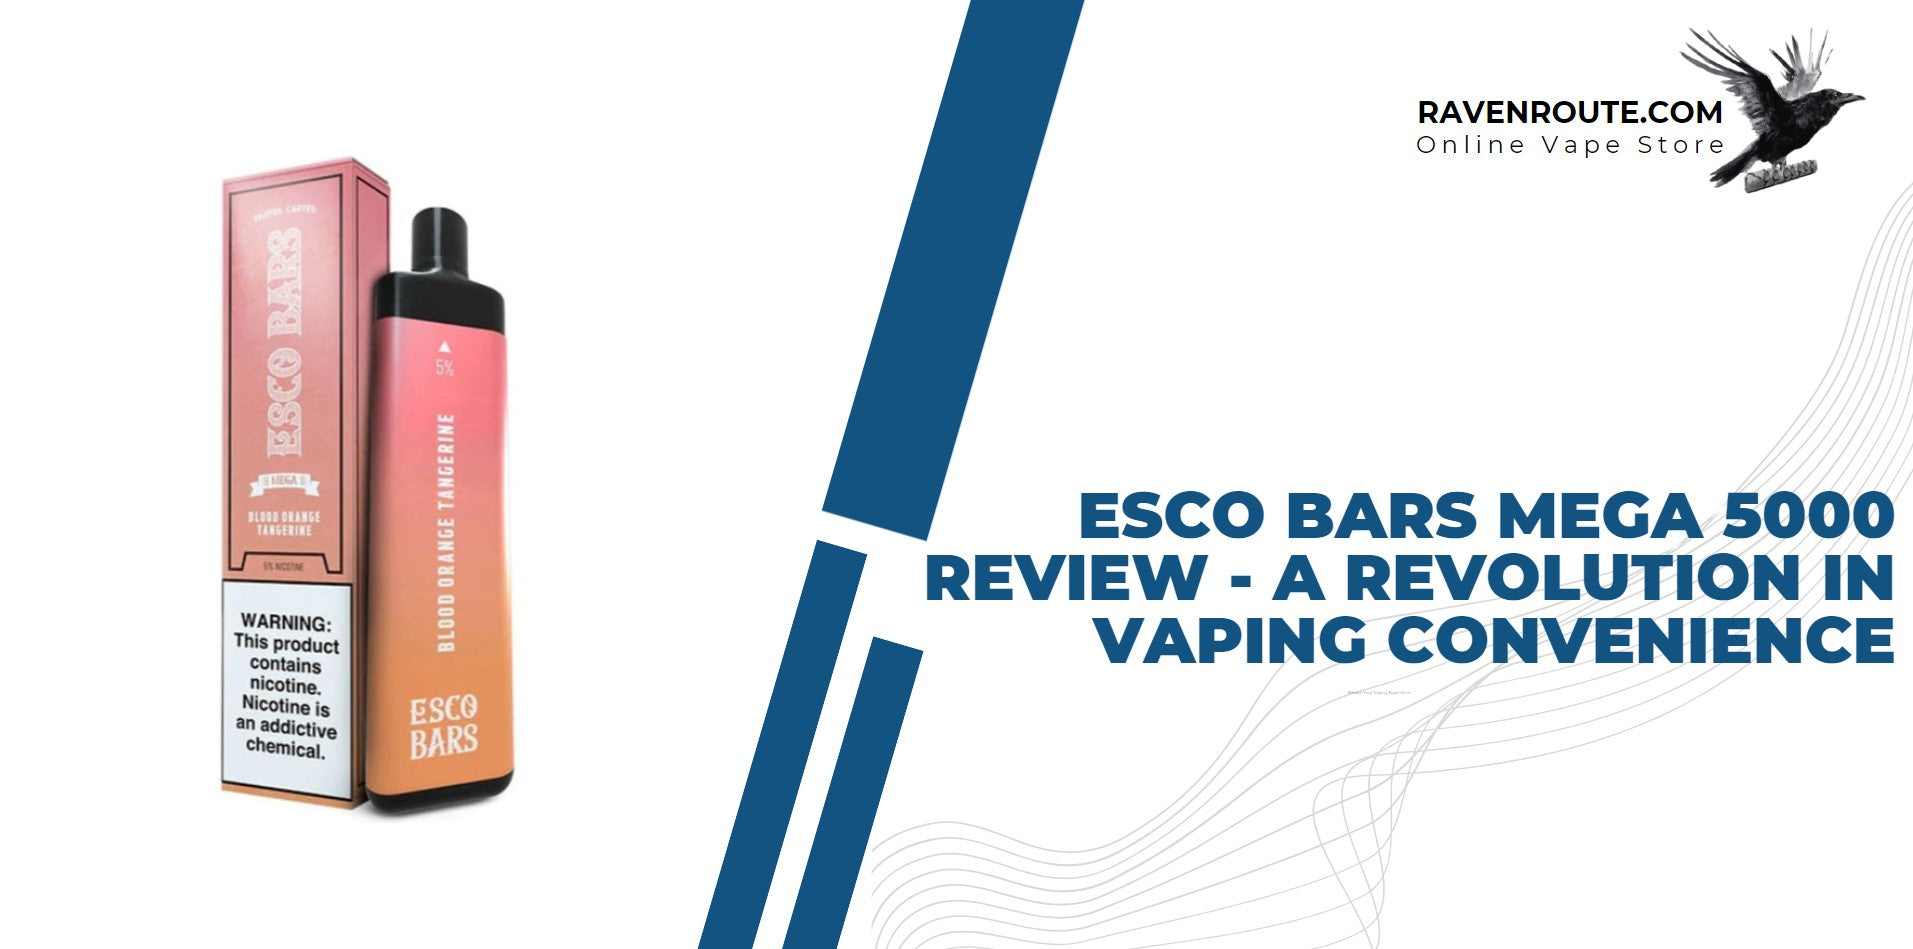 Esco Bars Mega 5000 Review - A Revolution in Vaping Convenience